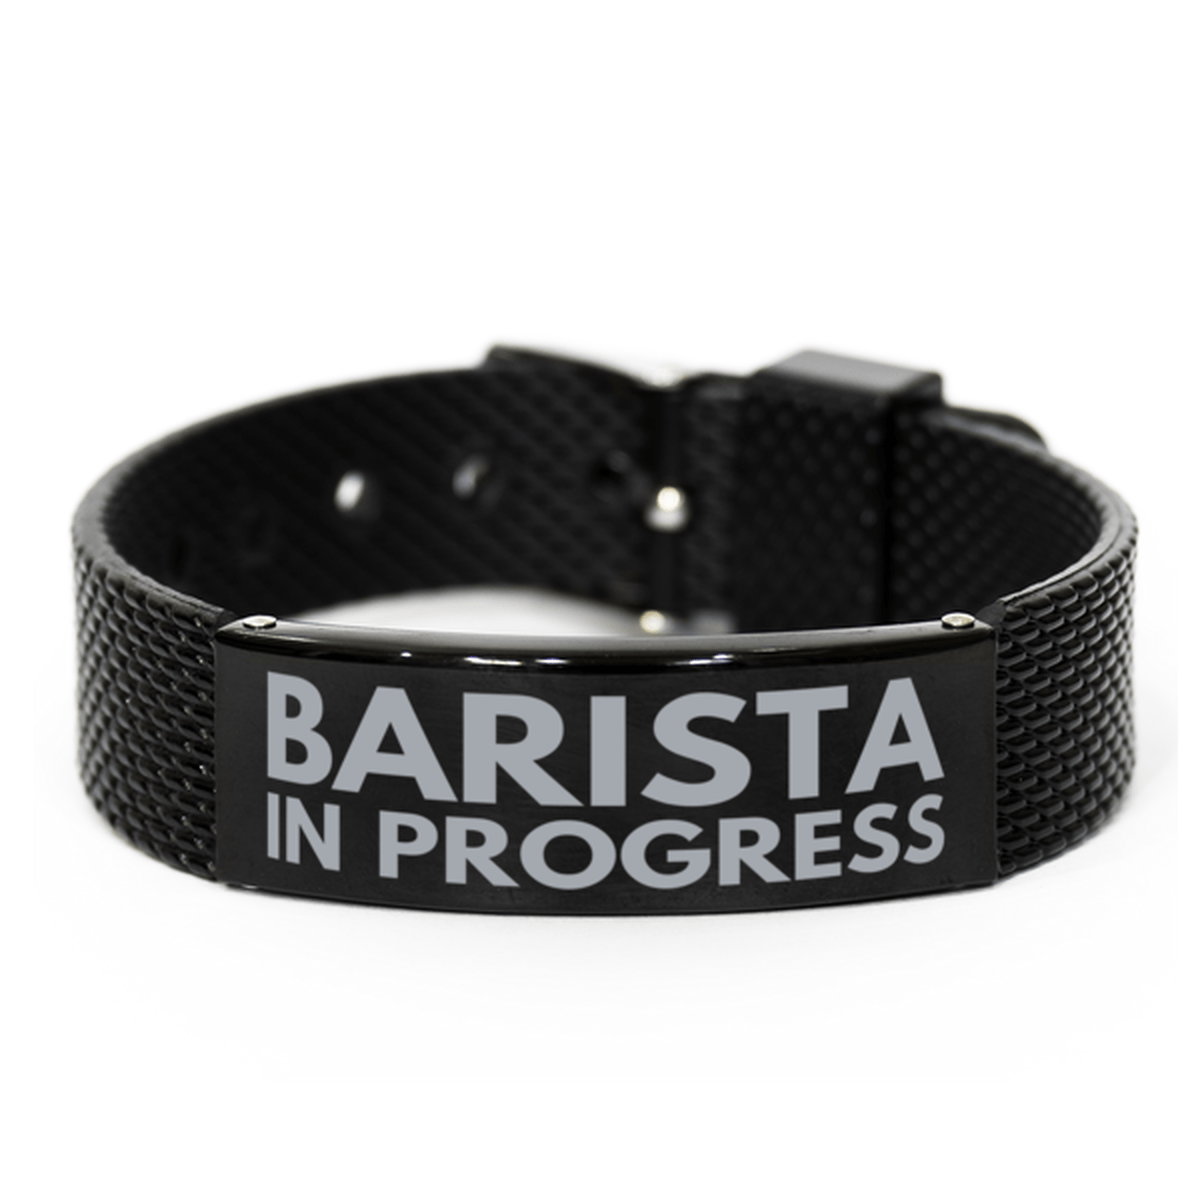 Inspirational Barista Black Shark Mesh Bracelet, Barista In Progress, Best Graduation Gifts for Students